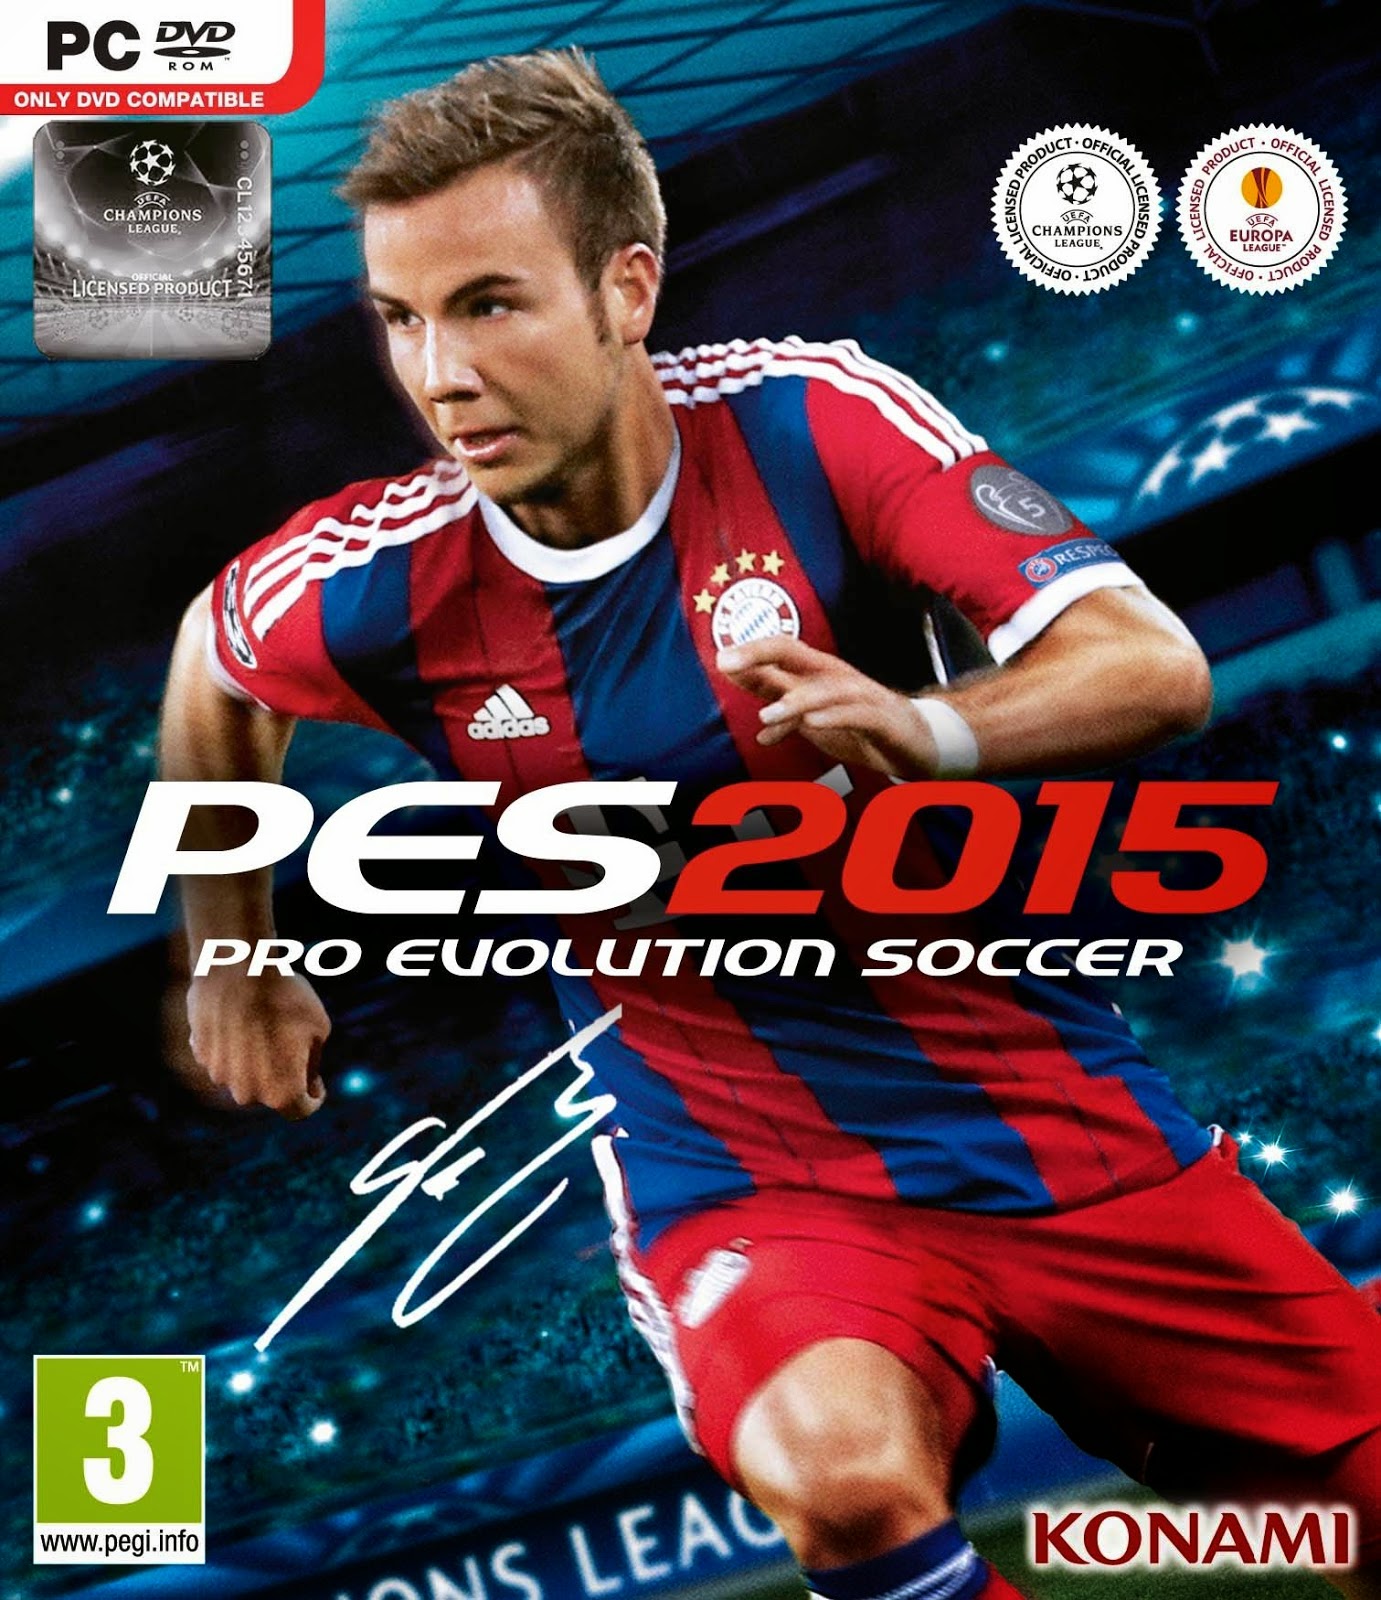 Pro Evolution Soccer 2015 + update patch v1.02 & v2.0 - PC [Free]